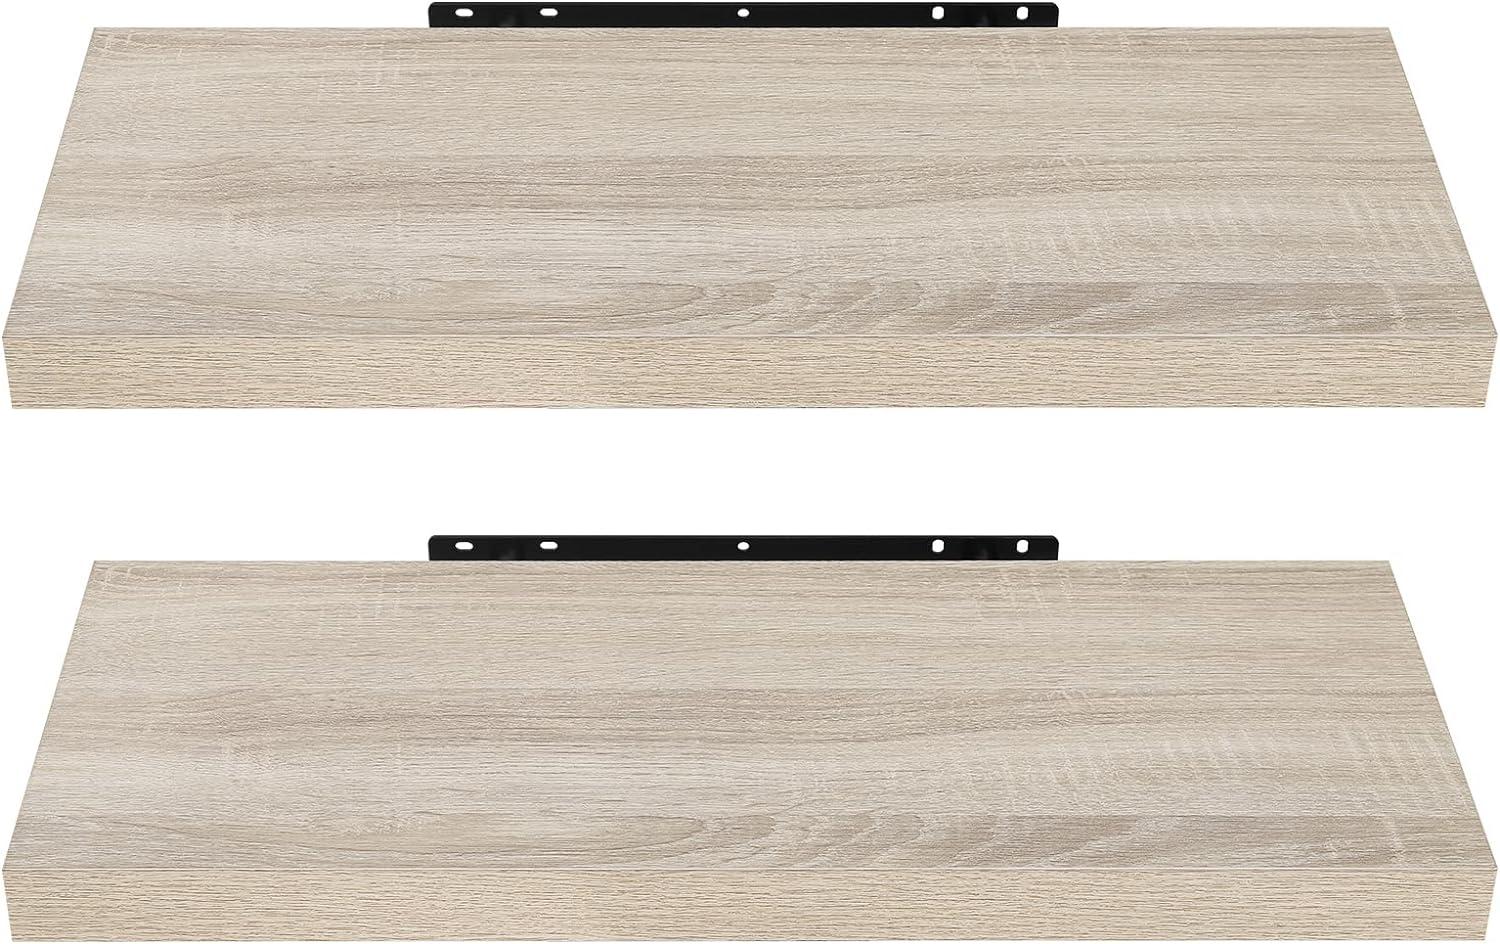 EUGAD Wandregal Wandboard 2er Set Hängeregal Holz Board Modern Sonoma Eiche 50x23x3,8cm 0091QJ-2 Bild 1